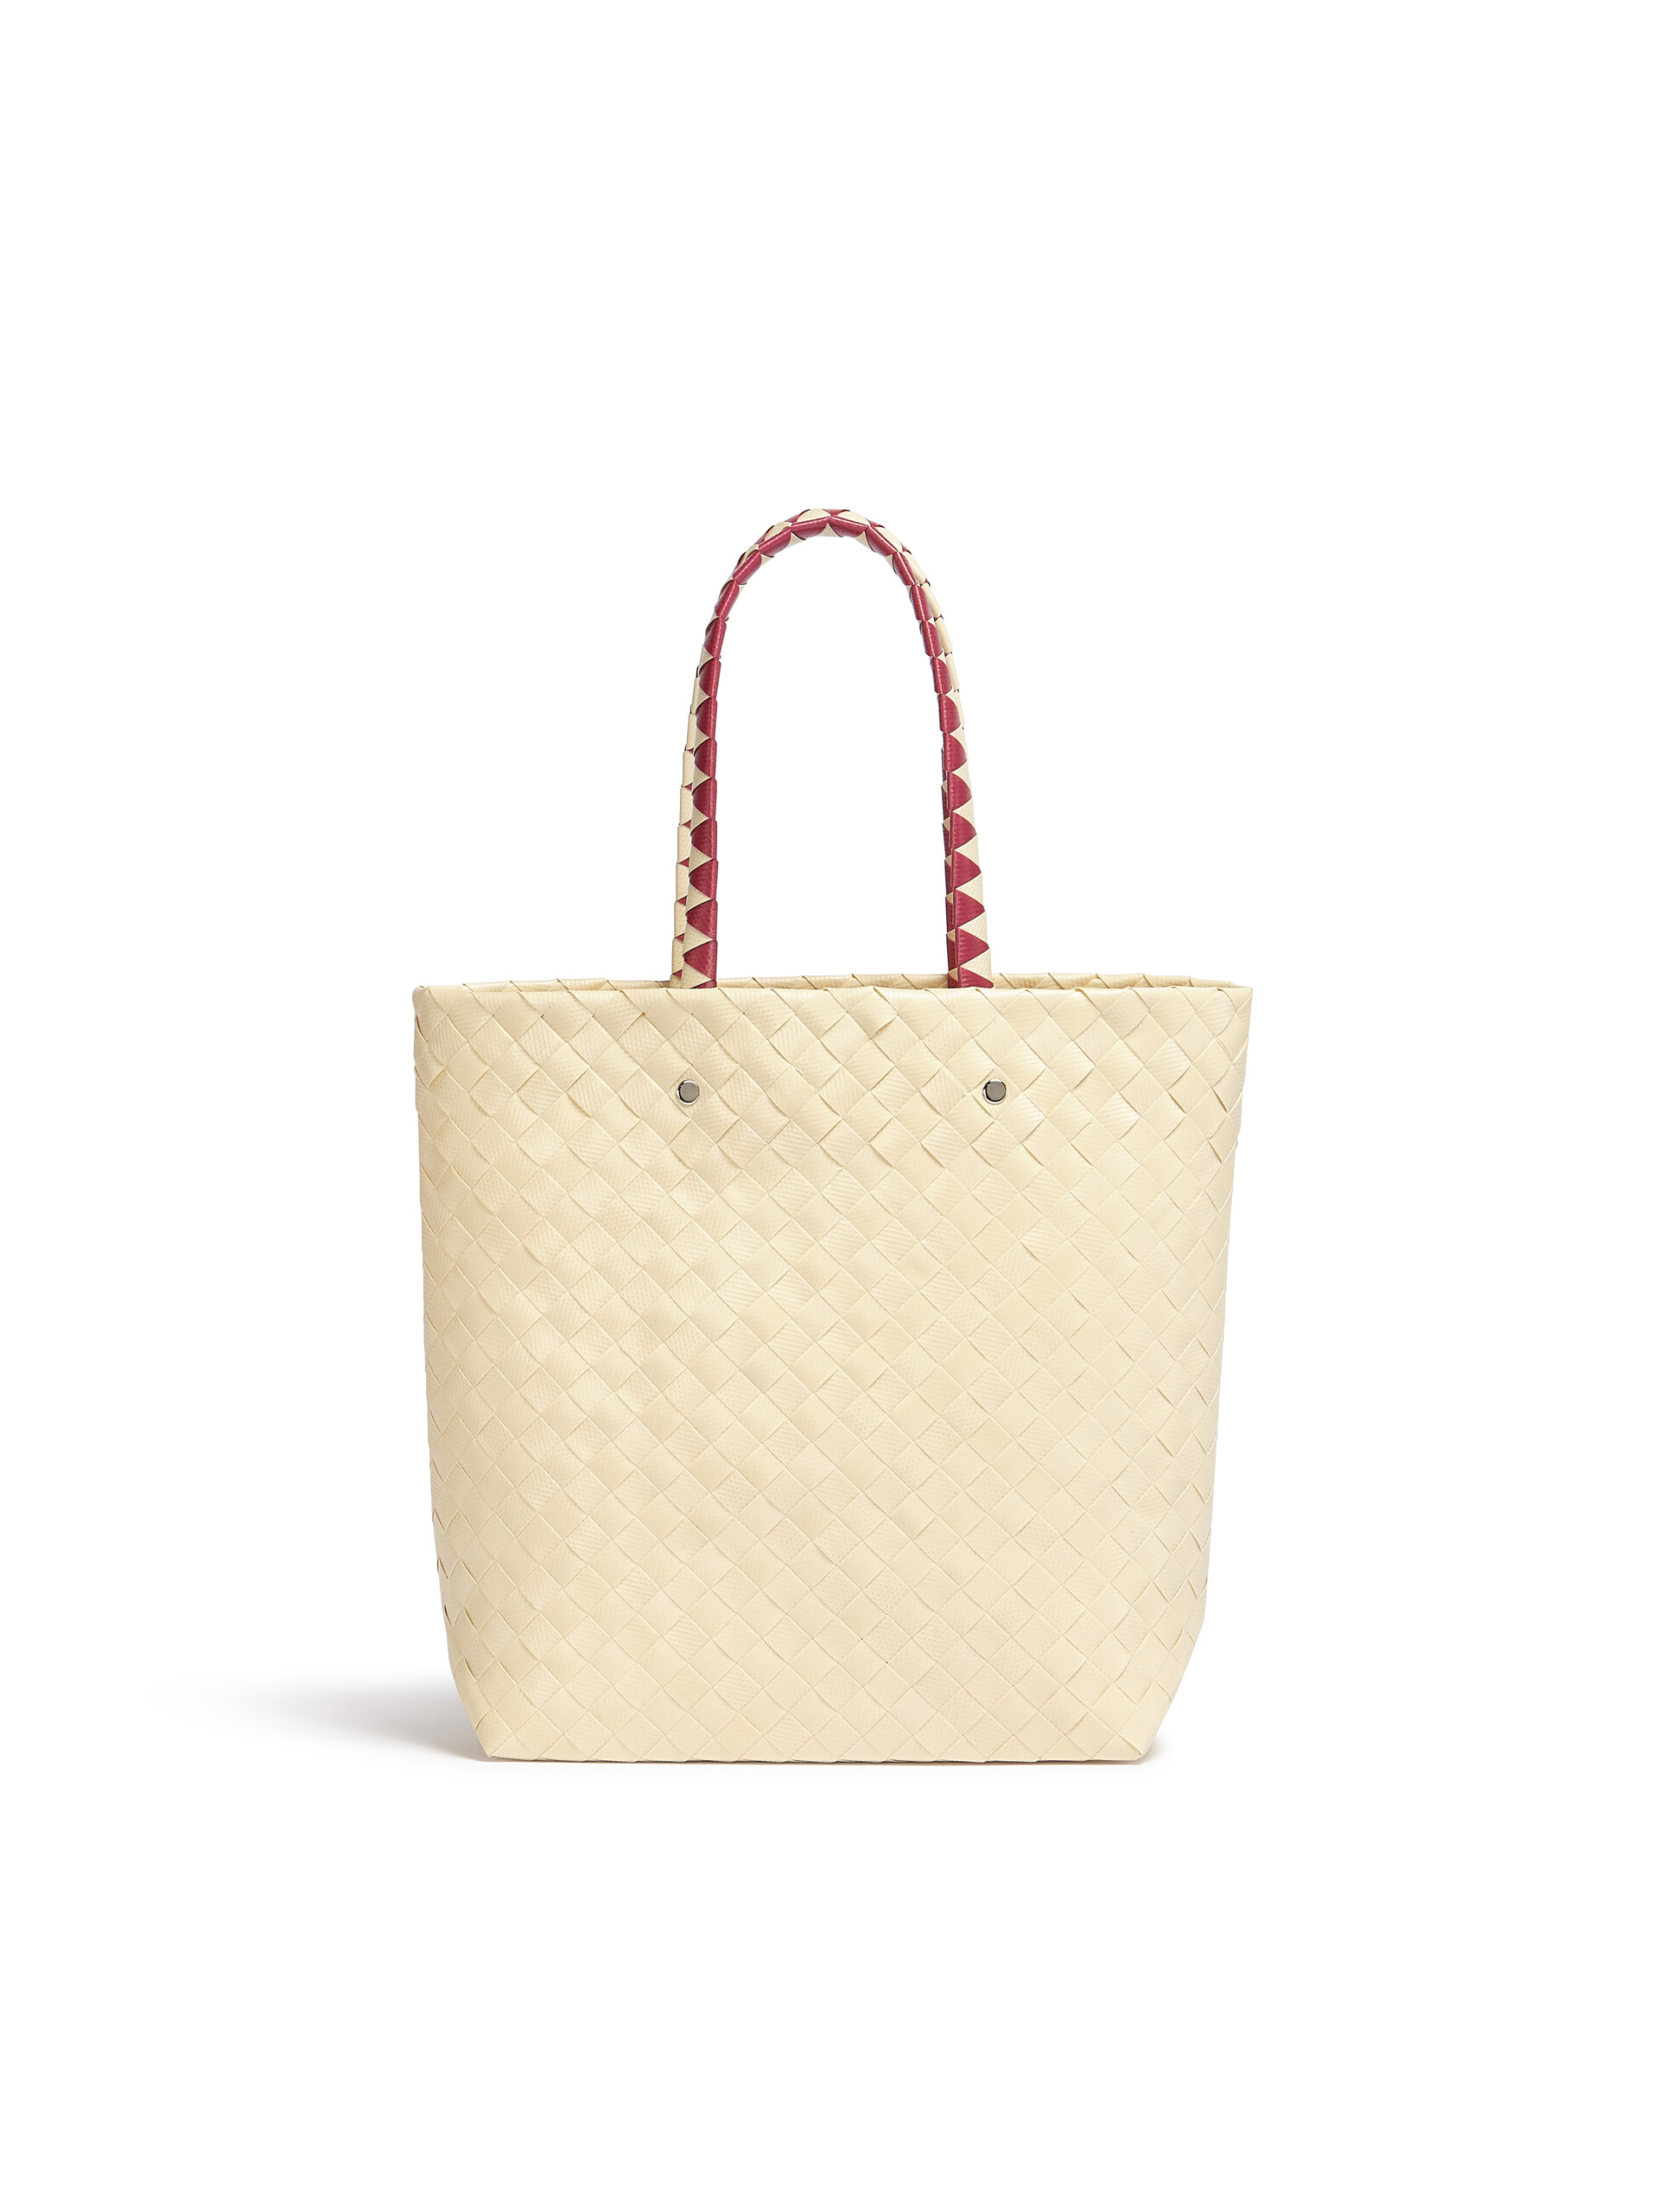 MARNI MARKET BORA small bag in green flower motif - Shopping Bags - Image 3